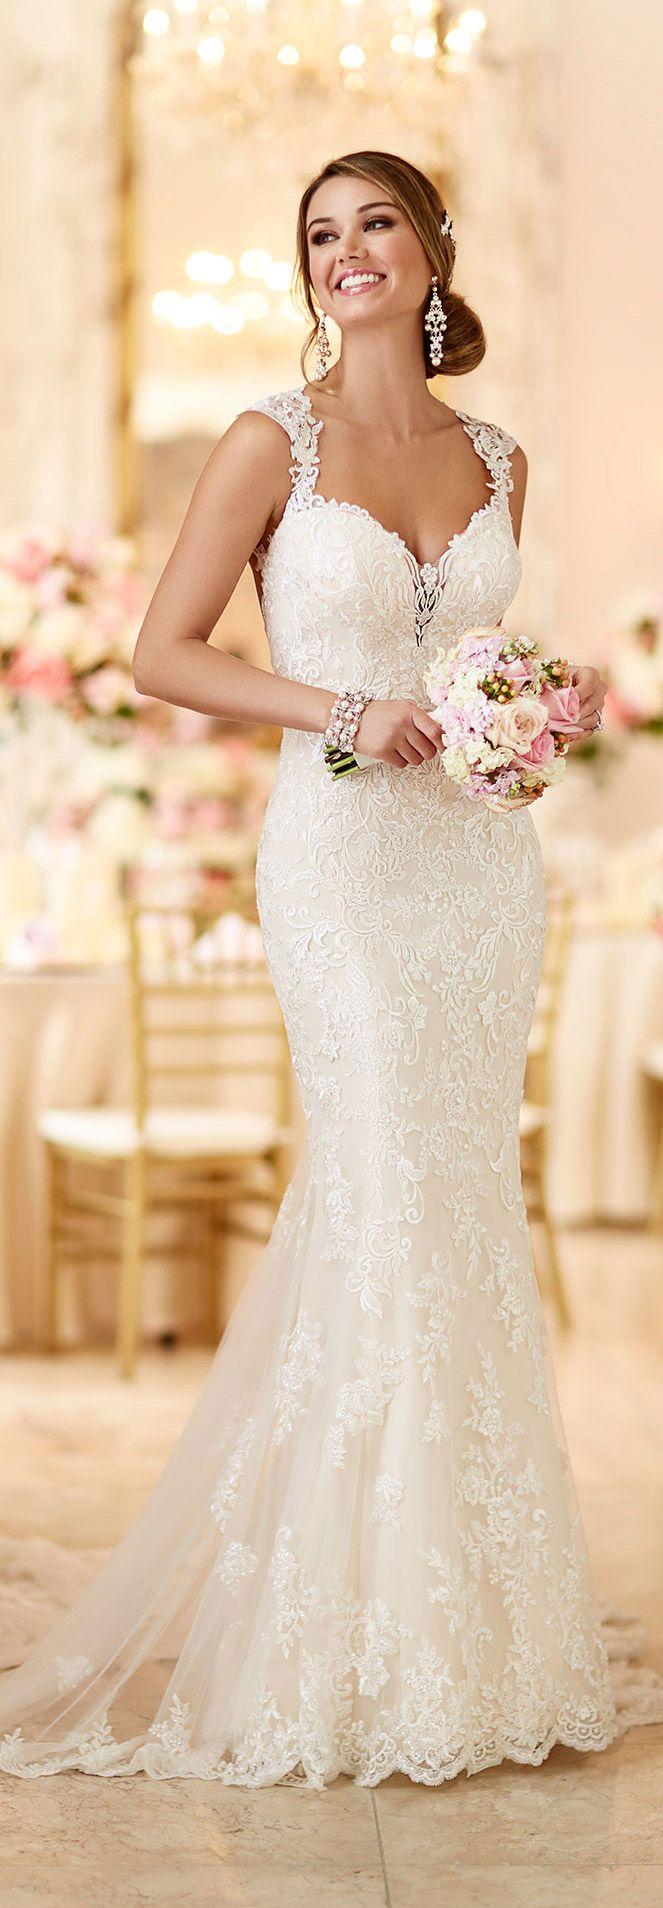 زفاف - Wedding: Gowns/veils/accessories